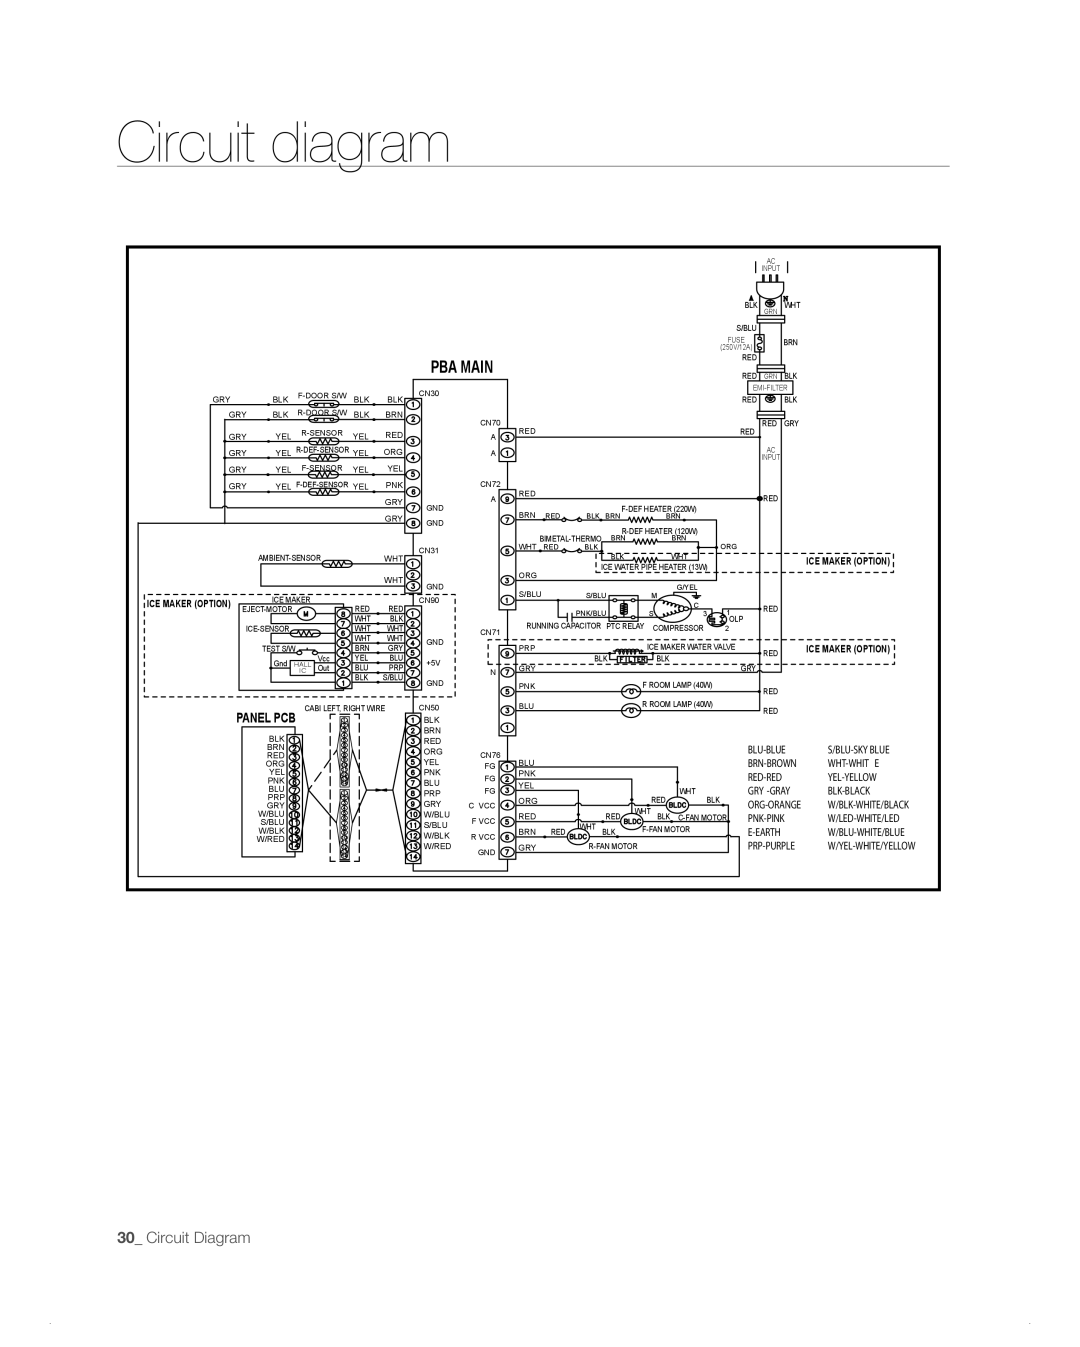 Samsung RB215AB Circuit diagram, Pba Main, Circuit Diagram, Panel Pcb, Blu-Blue, Wht-Whit E, Yel-Yellow, Blk-Black 